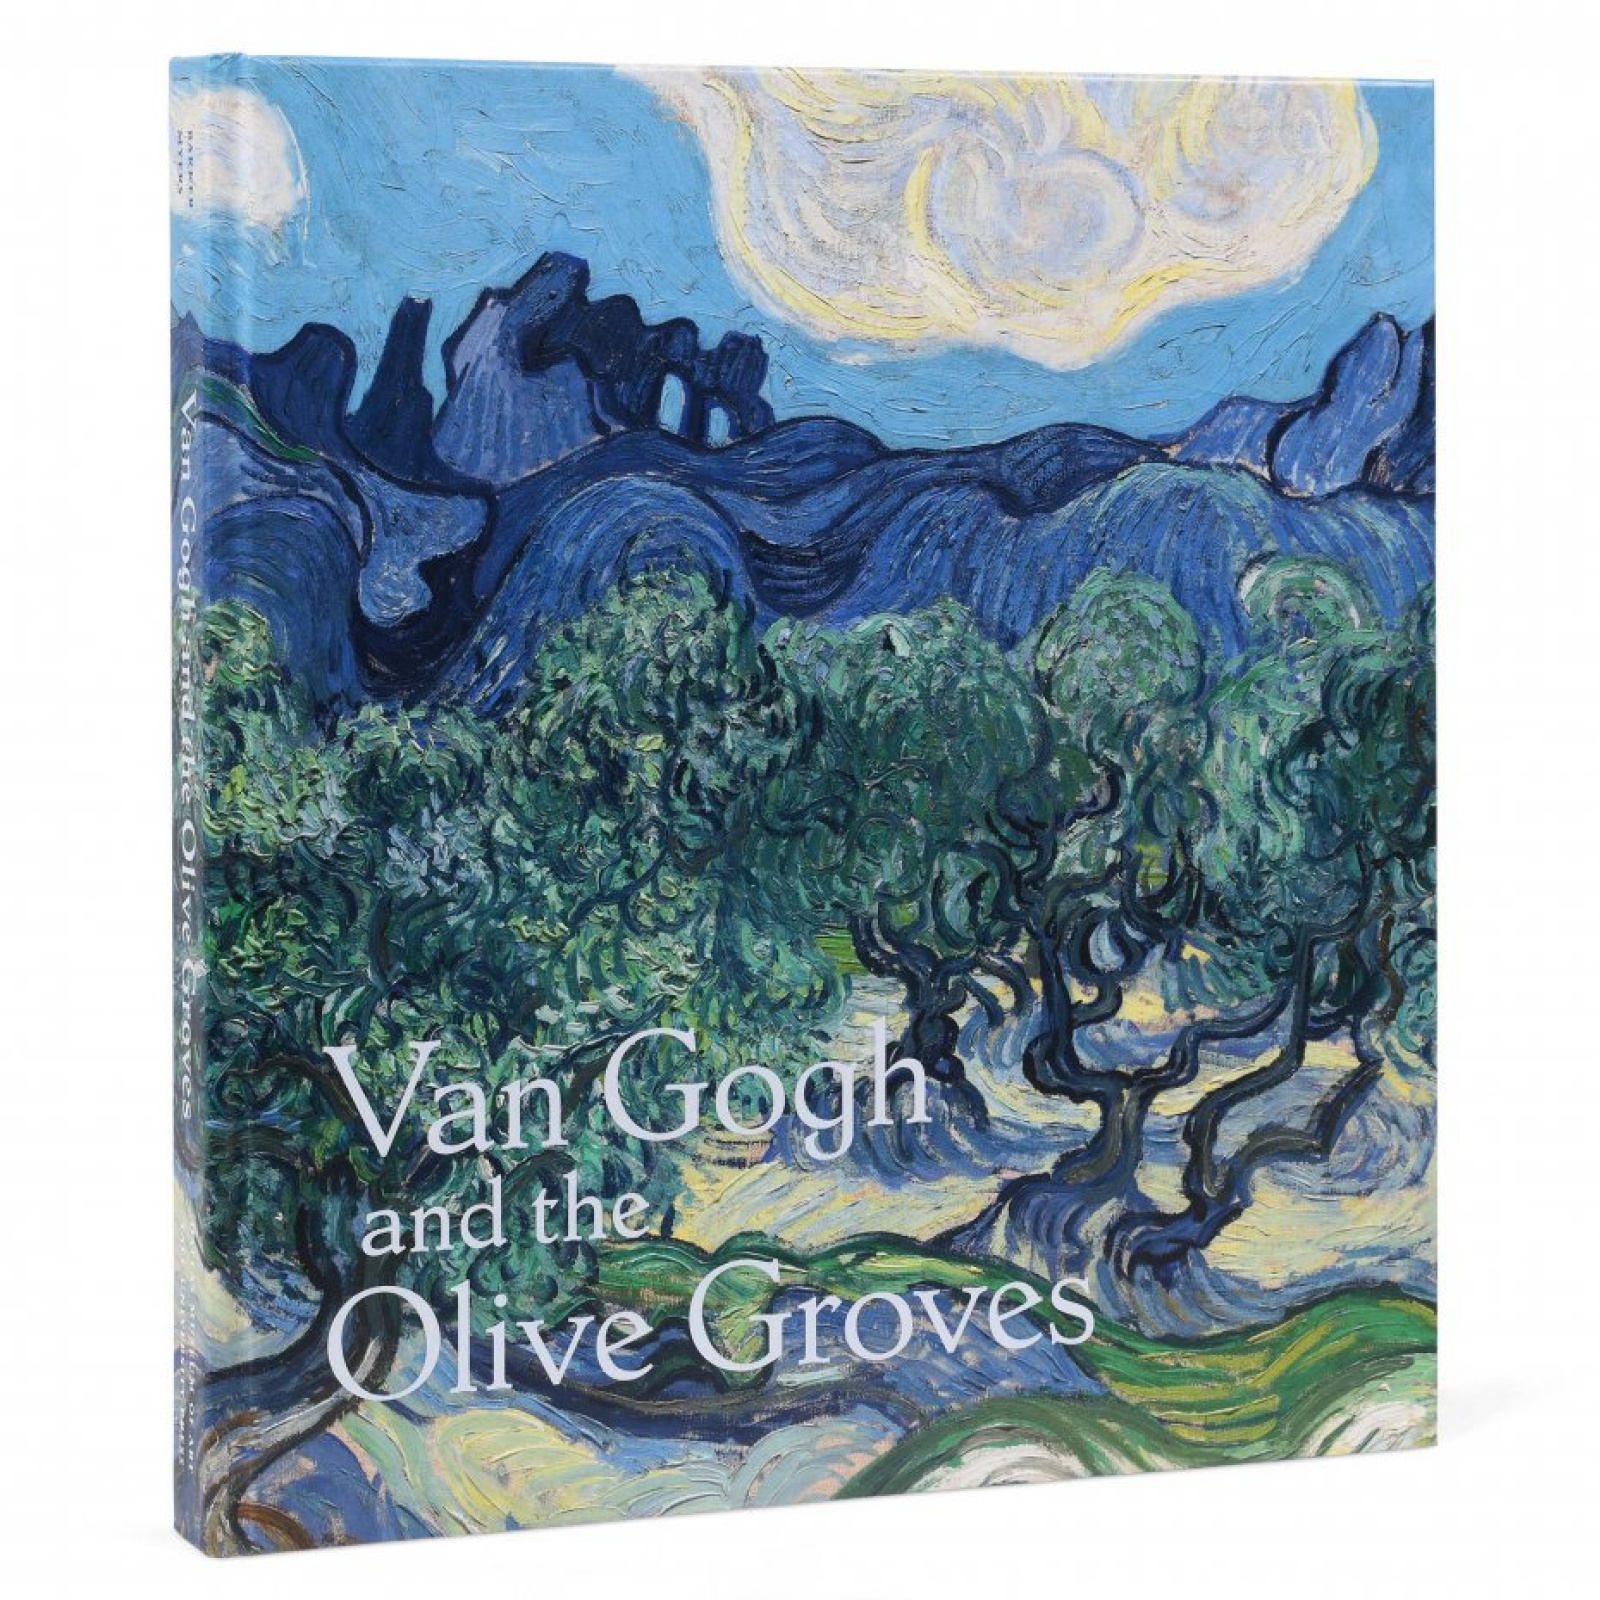 Винсент Ван Гог: картины с названиями, биография, произведения, творчество,  фото лучших работ | Артхив